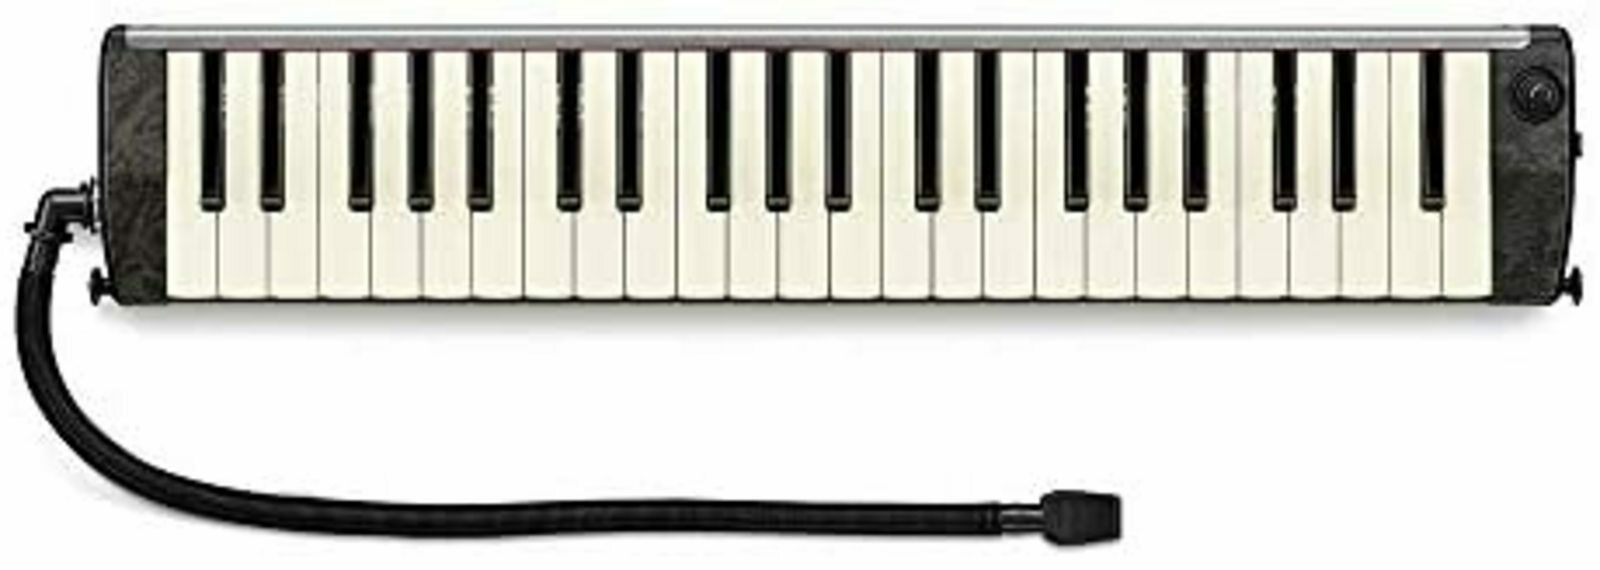 Hammond Hammond44 Pro-44hpv2  Eleaco Model Keyboard Harmonica F/s W/tracking#